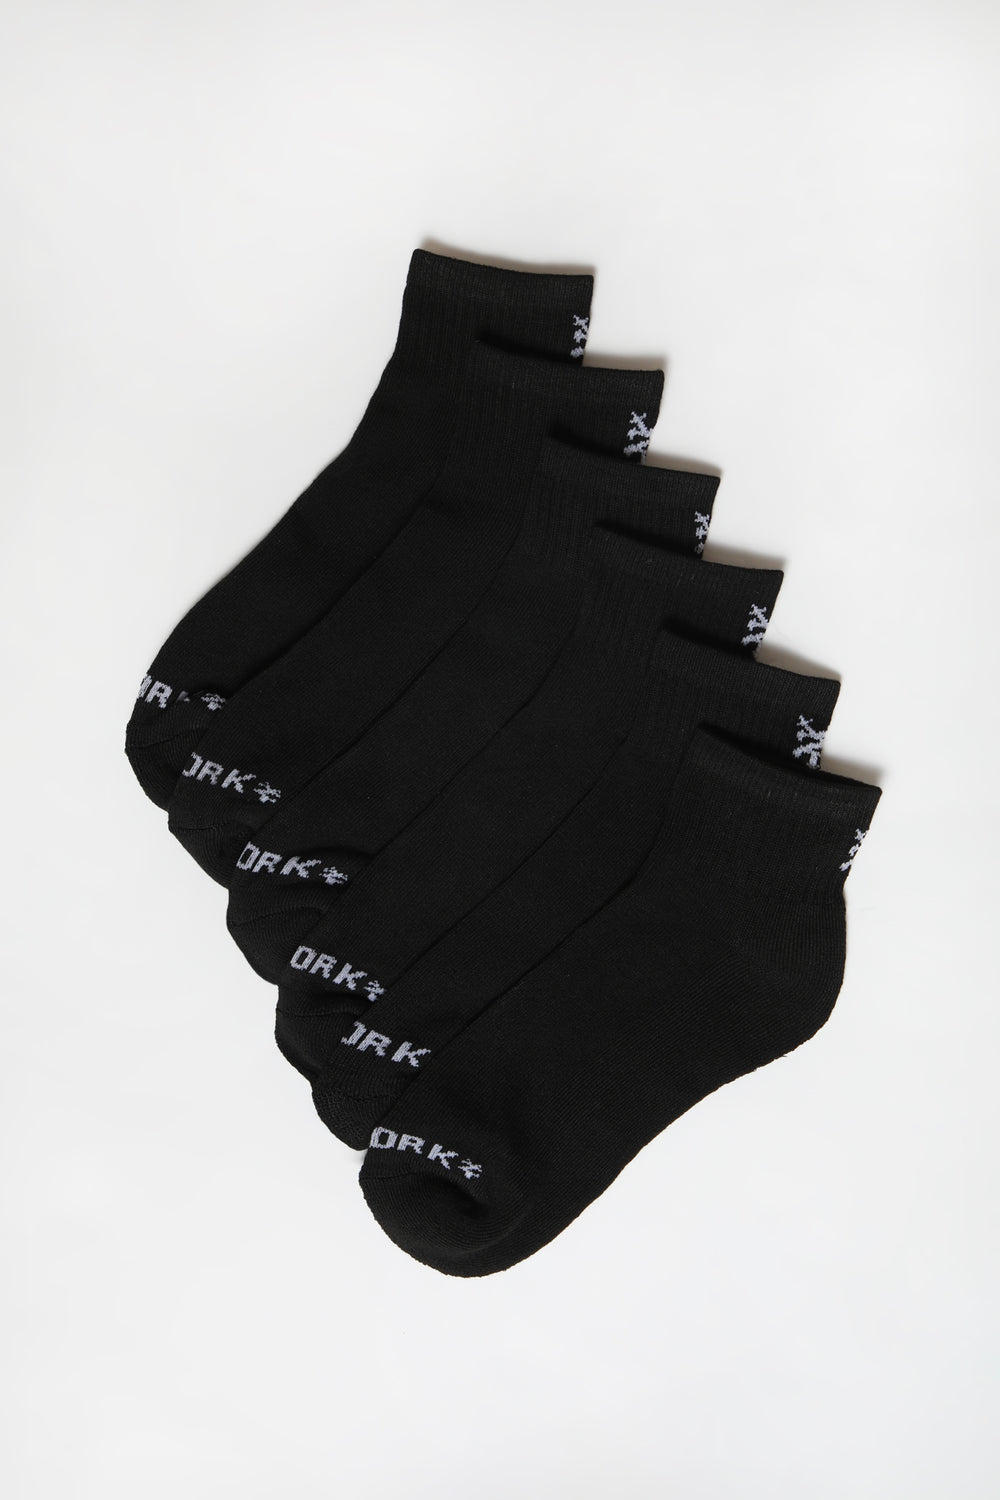 Zoo York Youth Athletic Ankle Socks 6-Pack Black